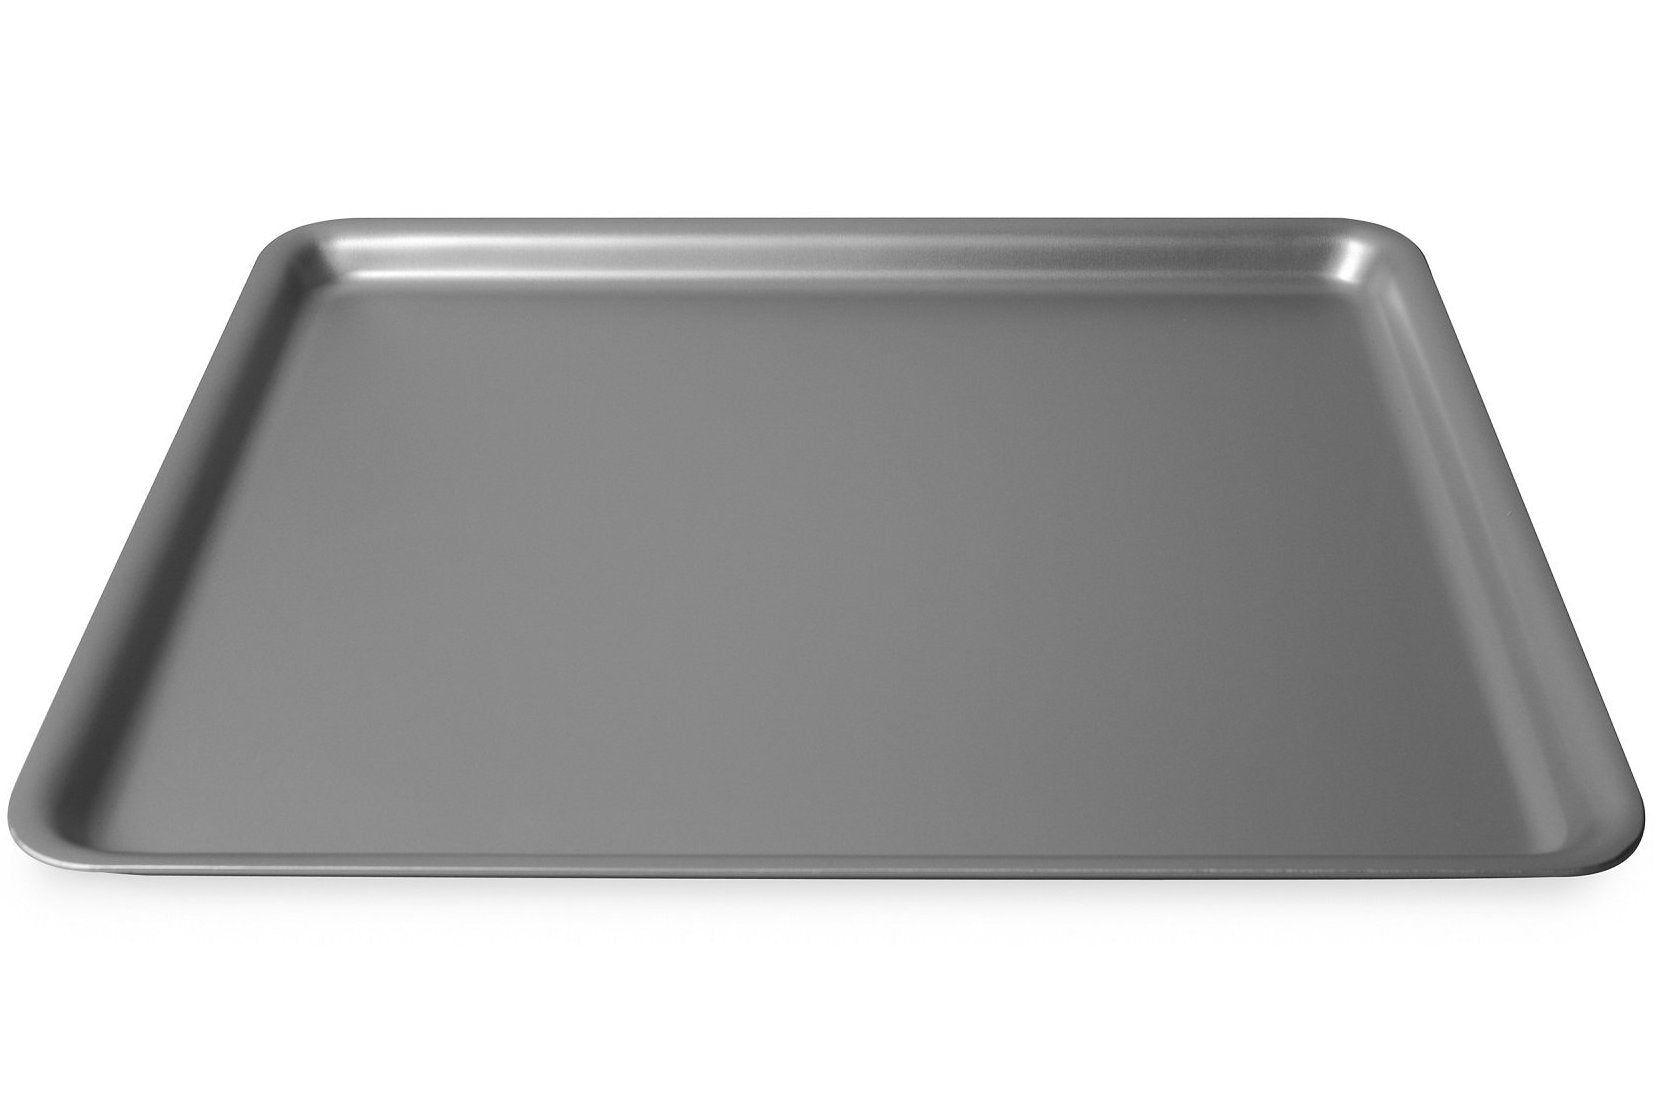 UchiCook 3-Piece Breading Trays, Silver